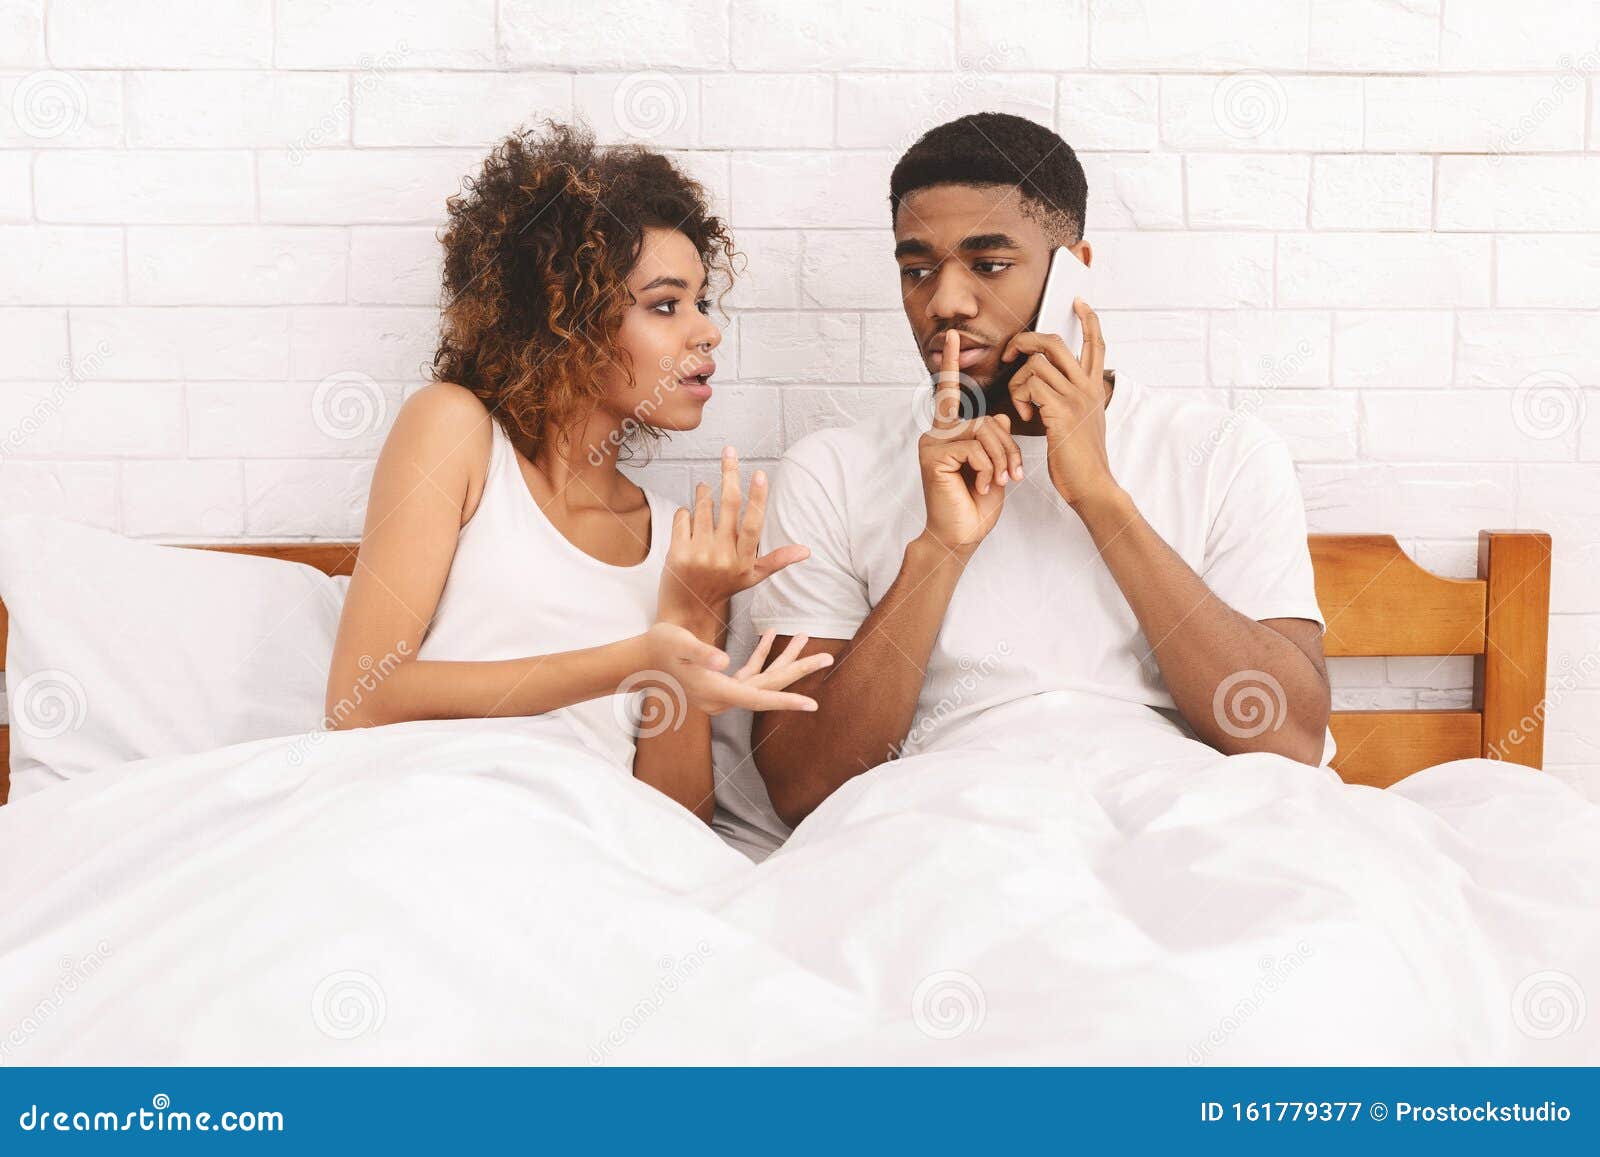 husband ignoring hot wife